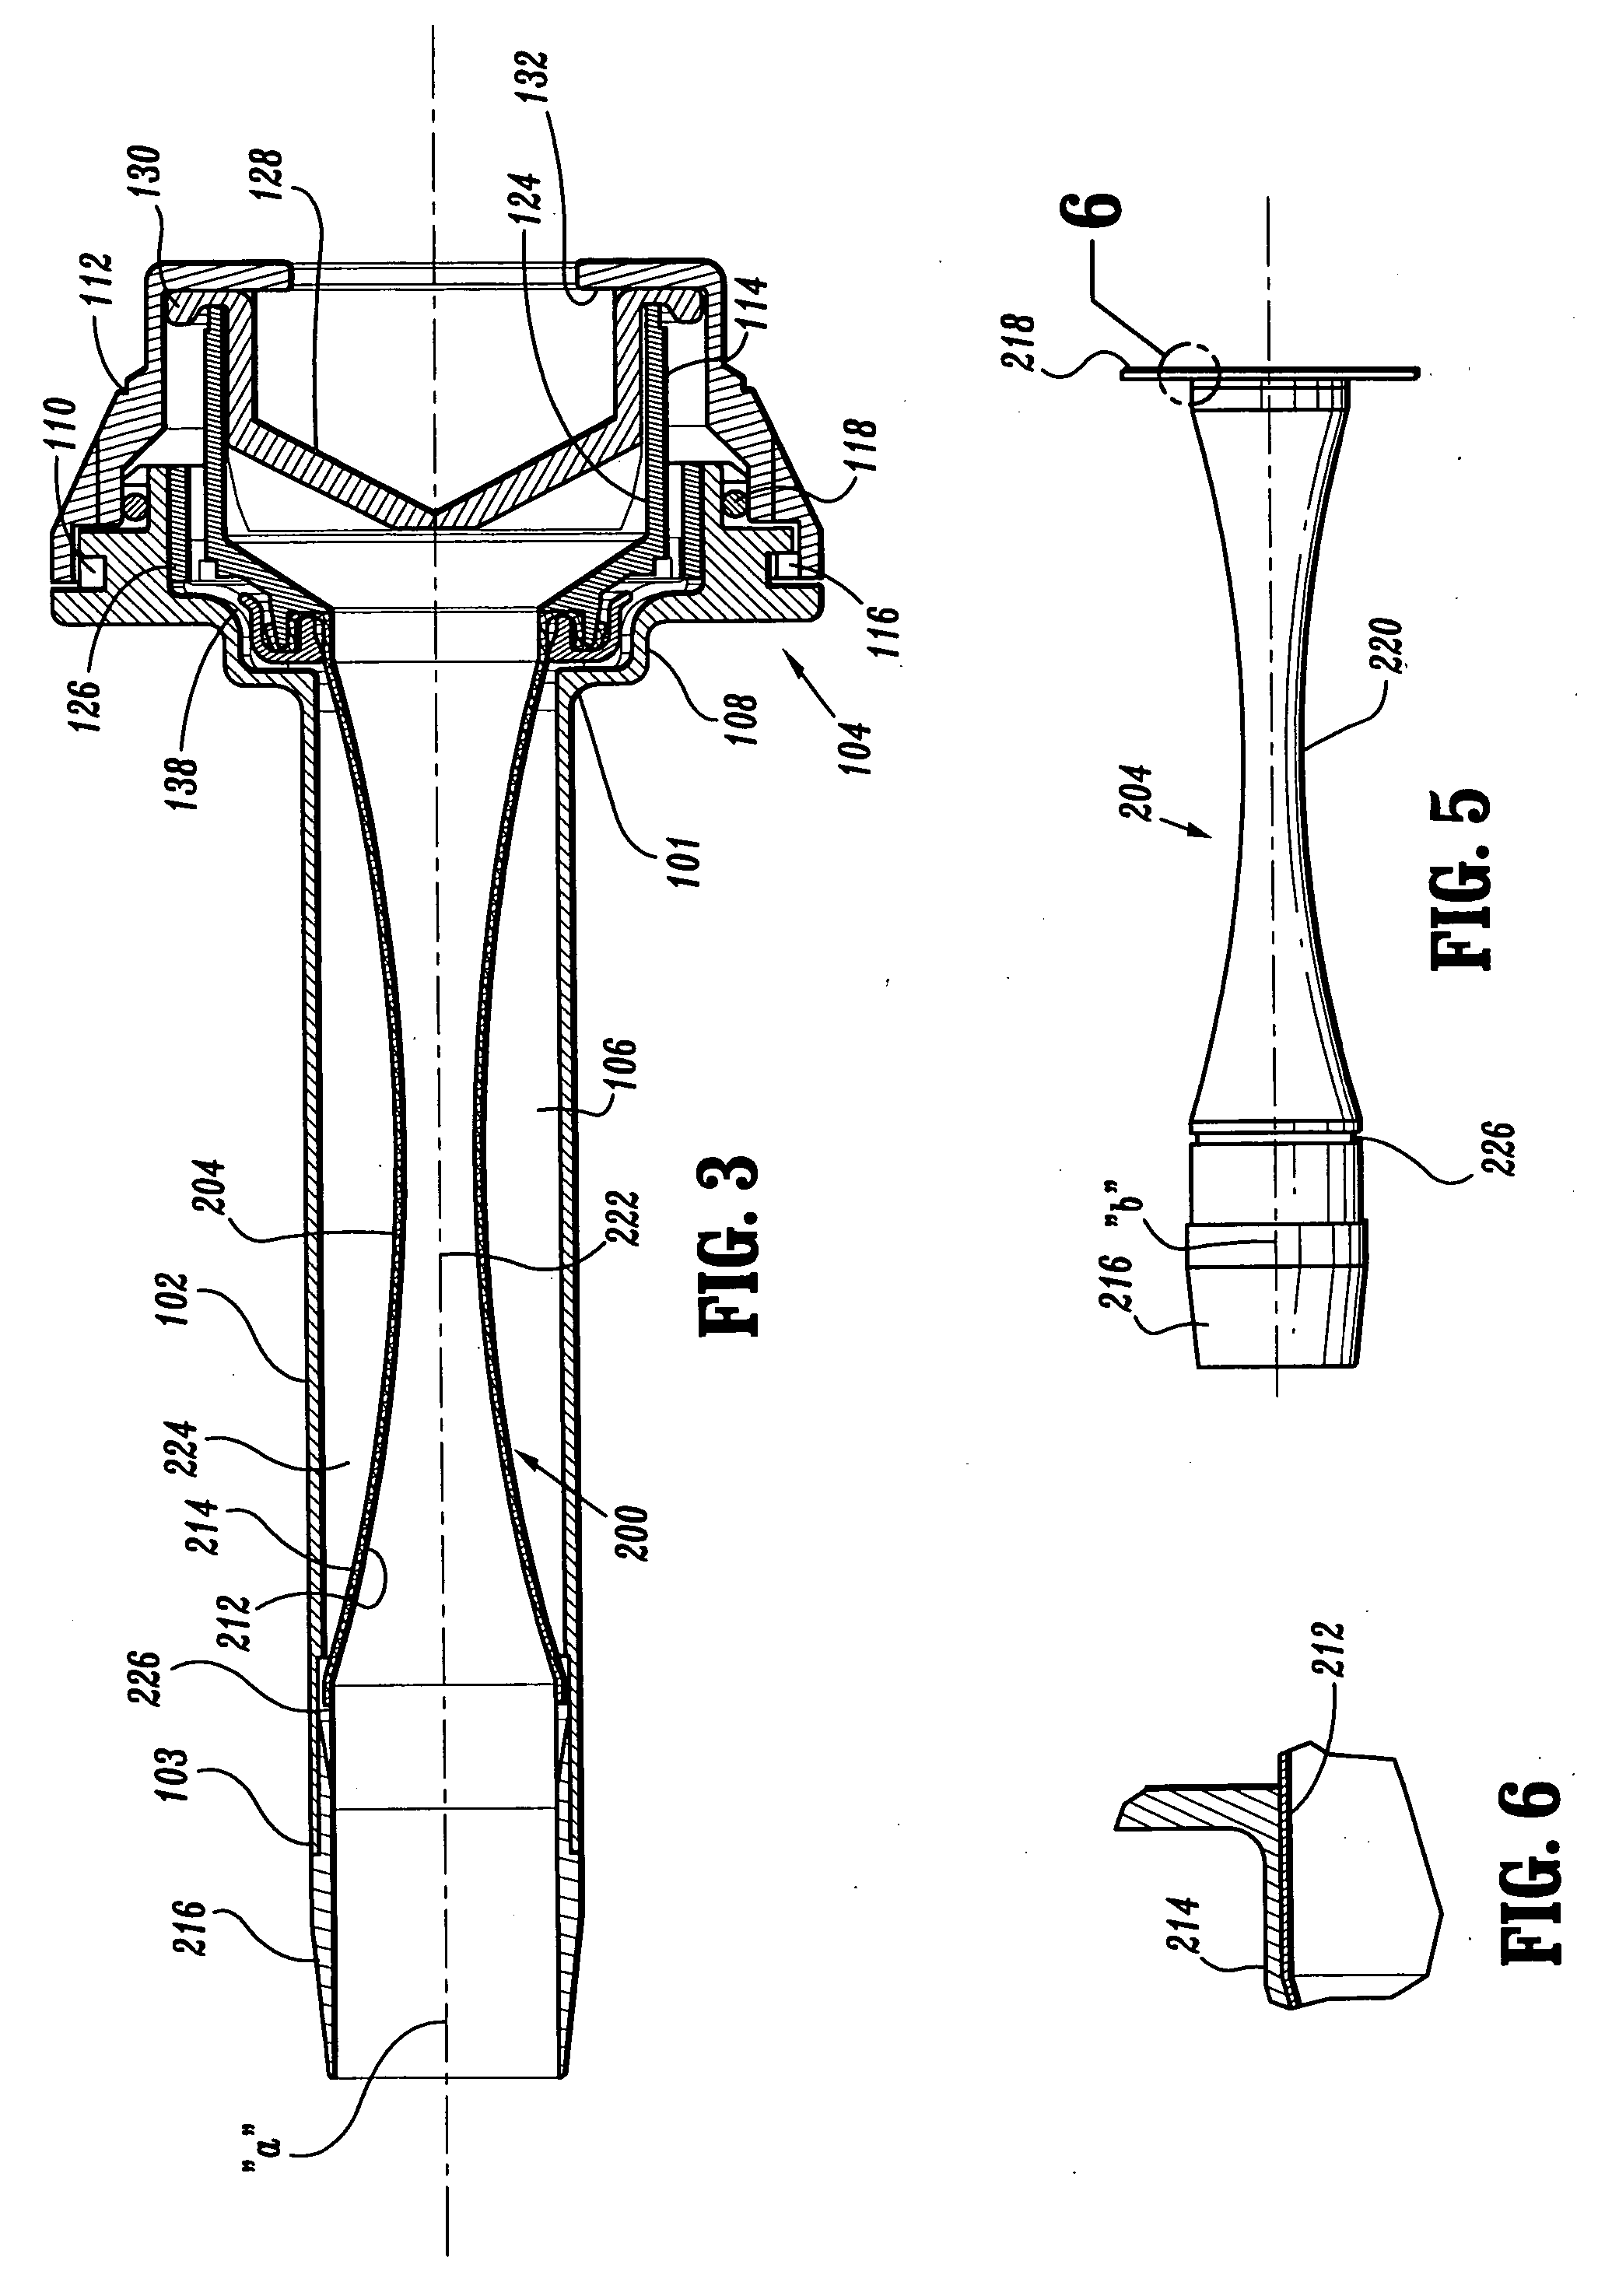 Surgical access apparatus